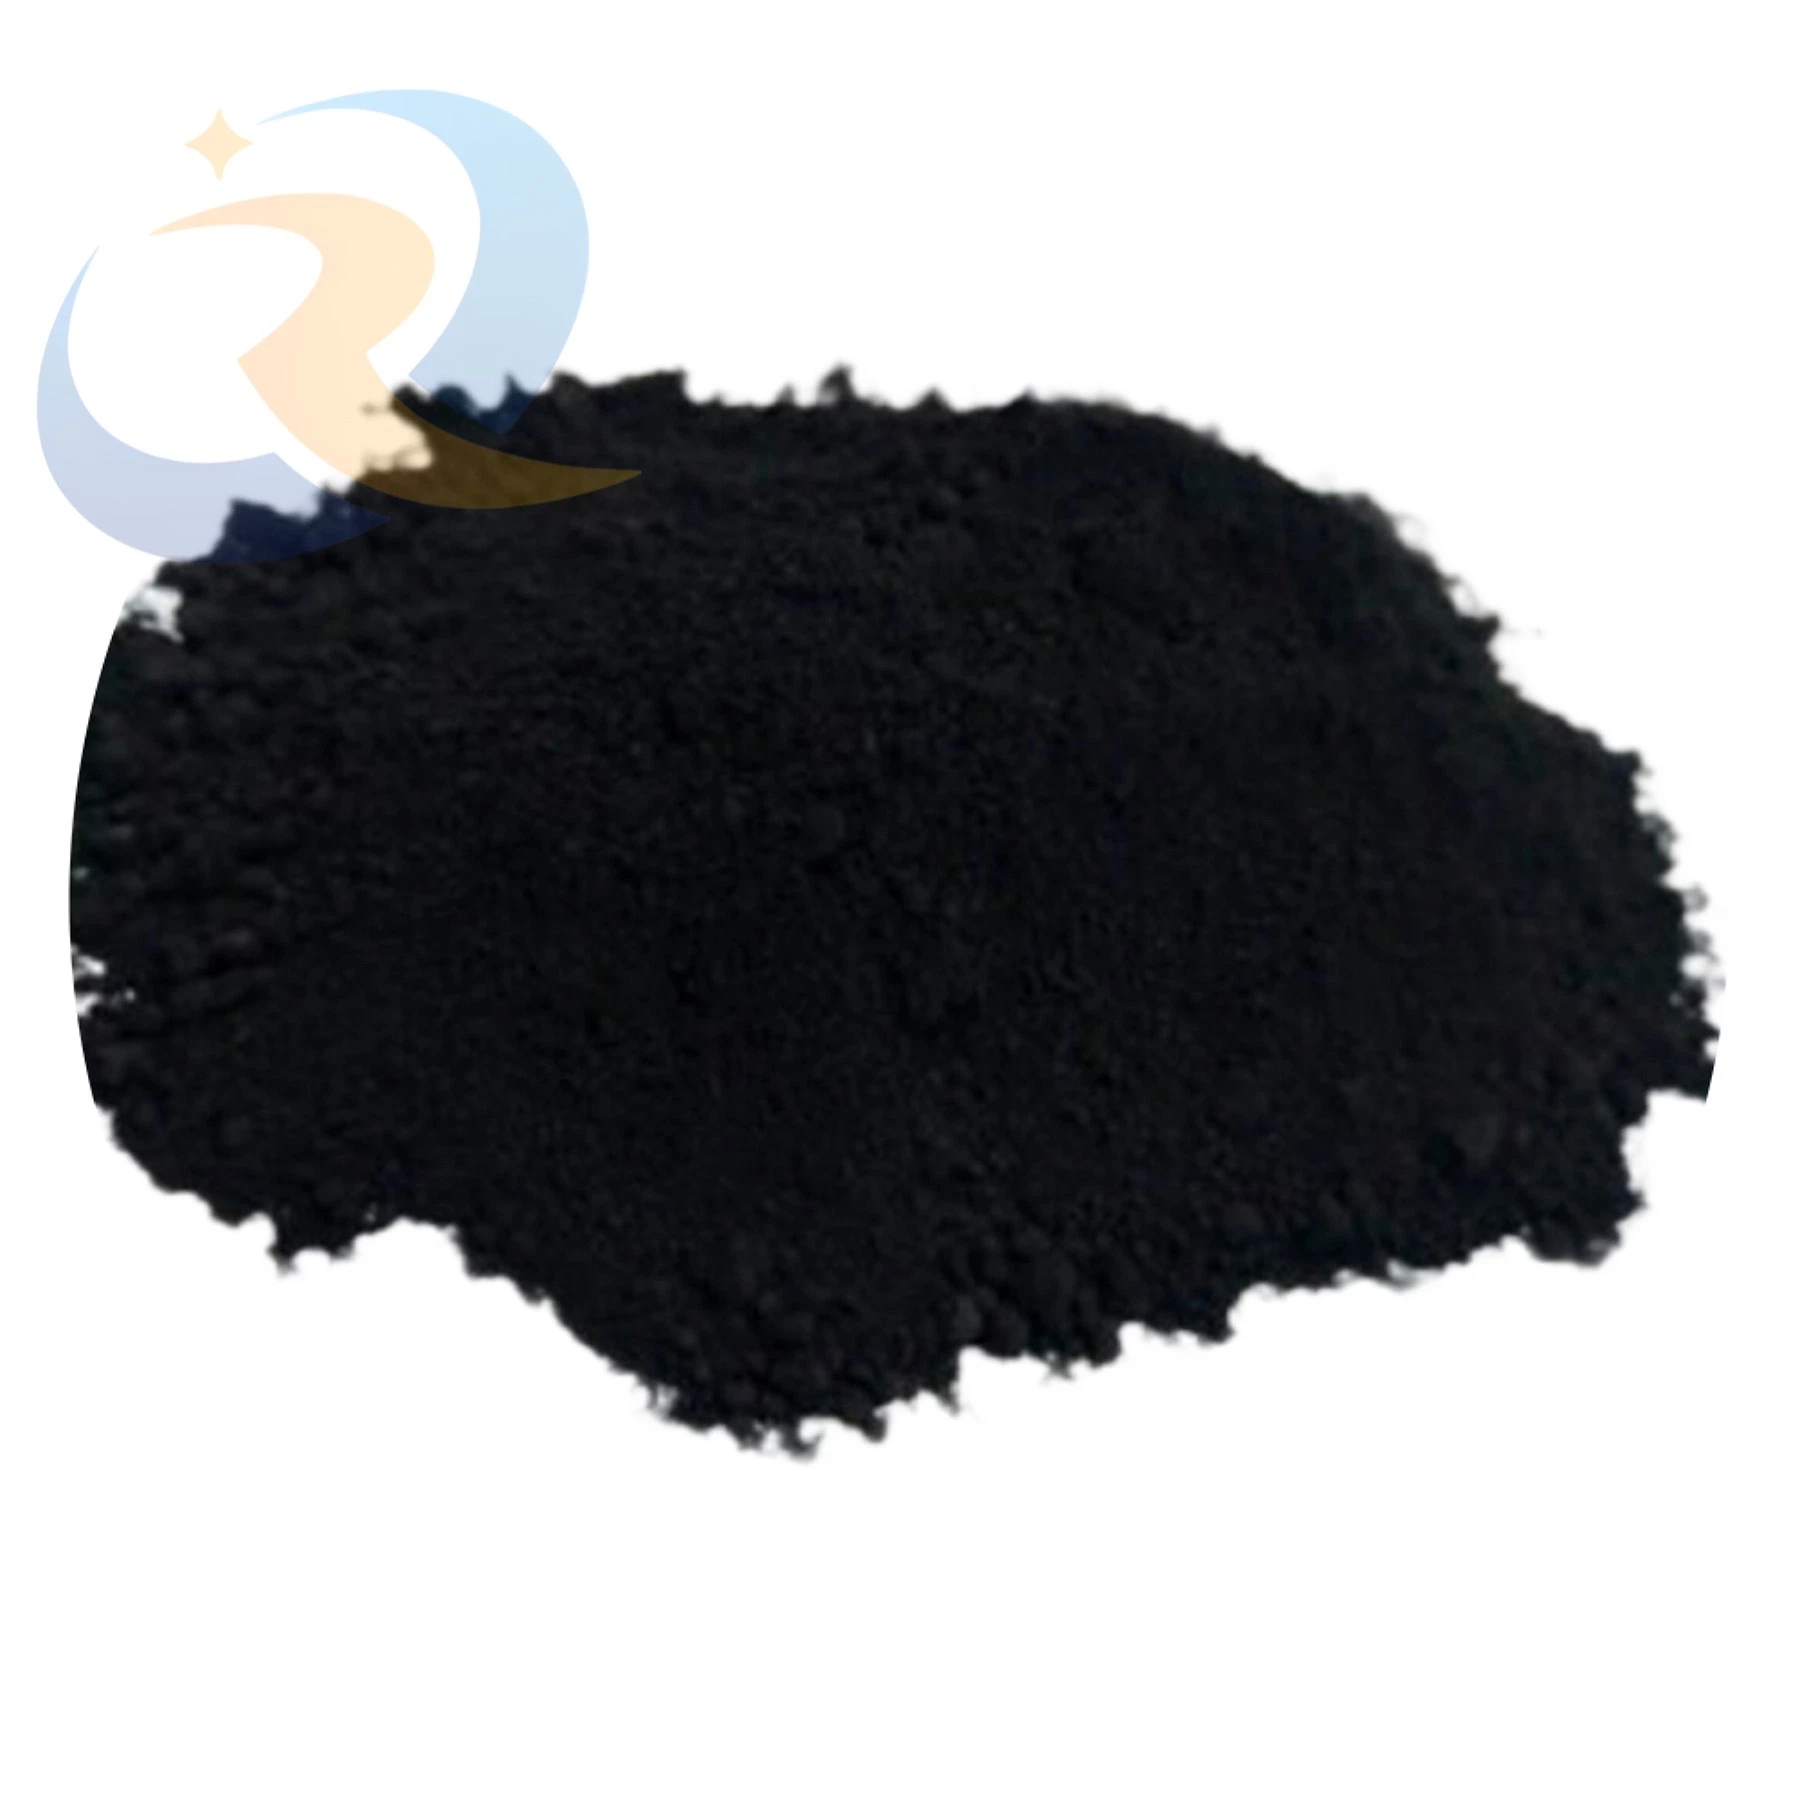 Rubber Black Powder Carbon Black Price Pakistan